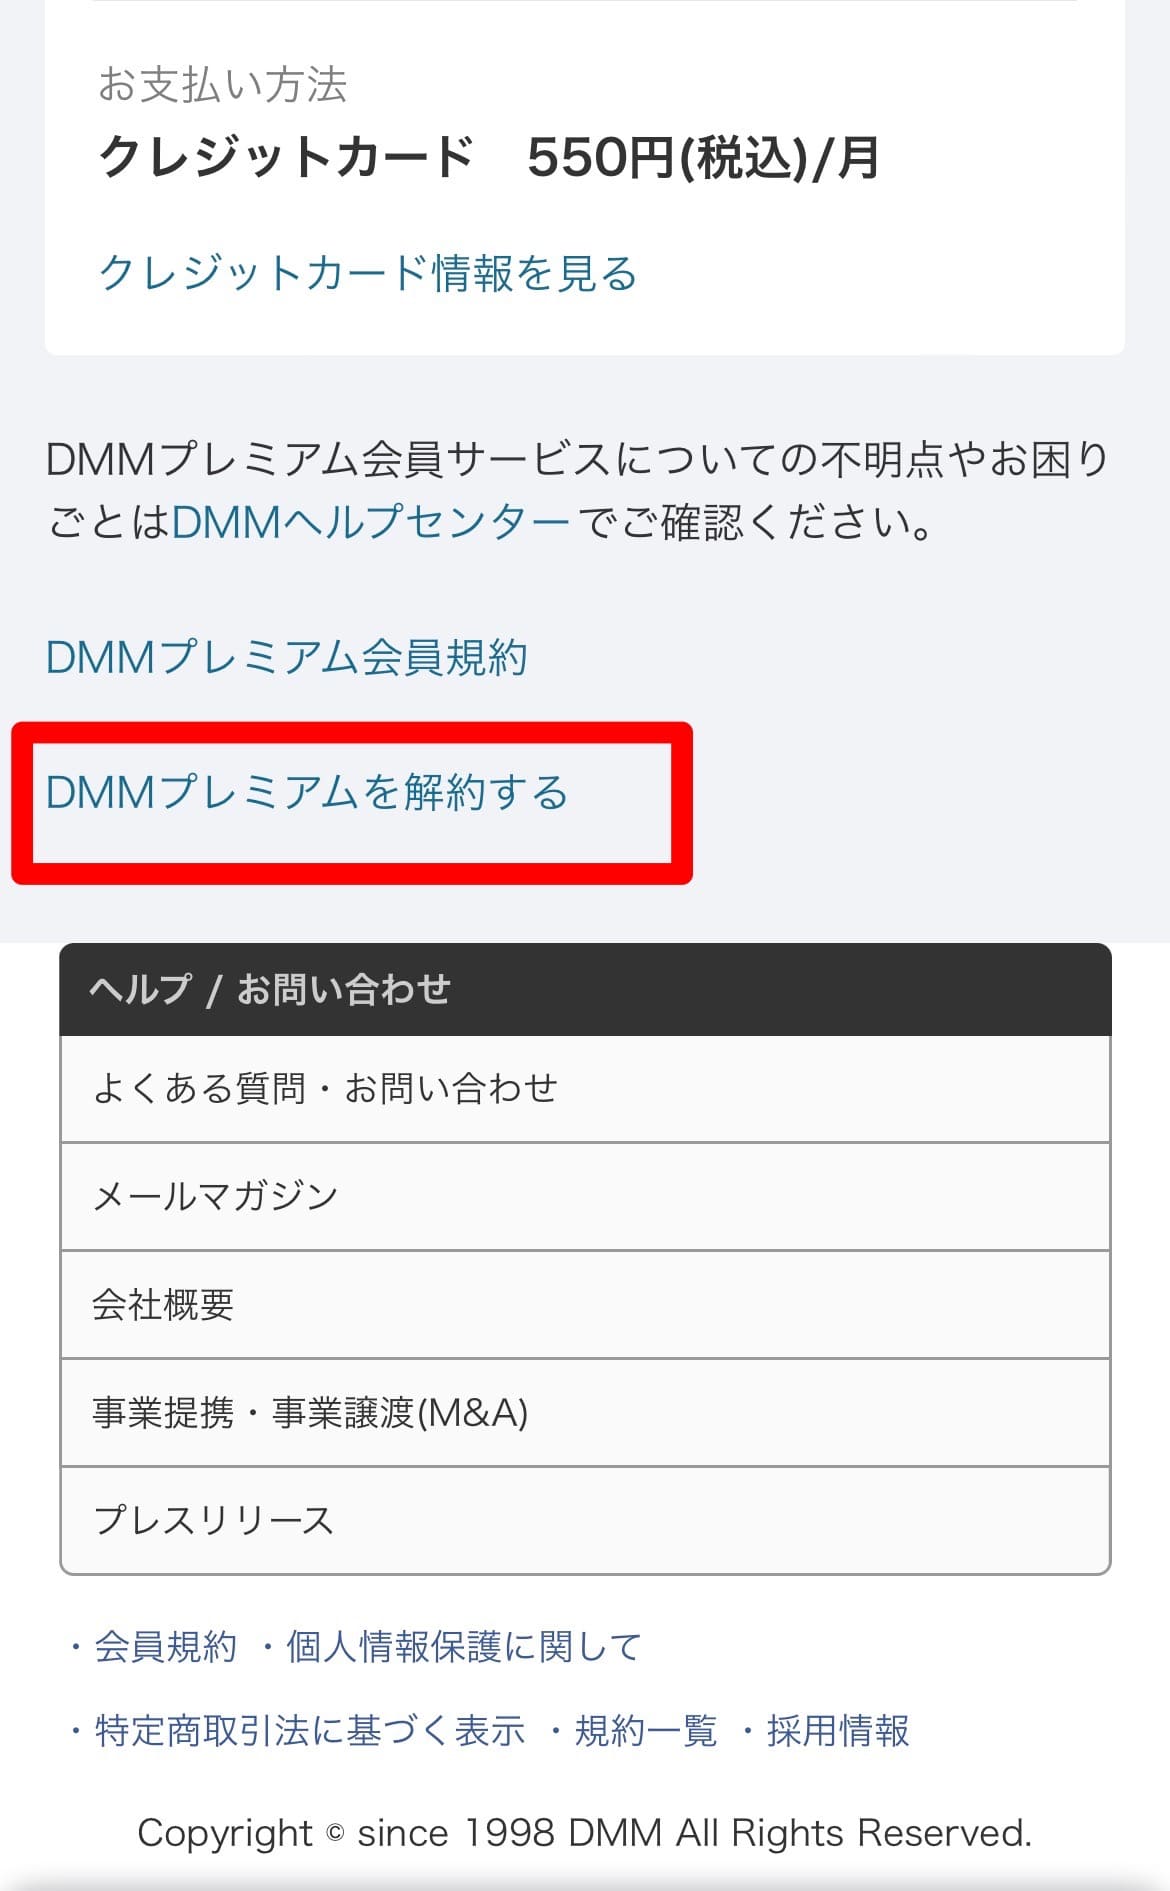 DMMTV 解約手順